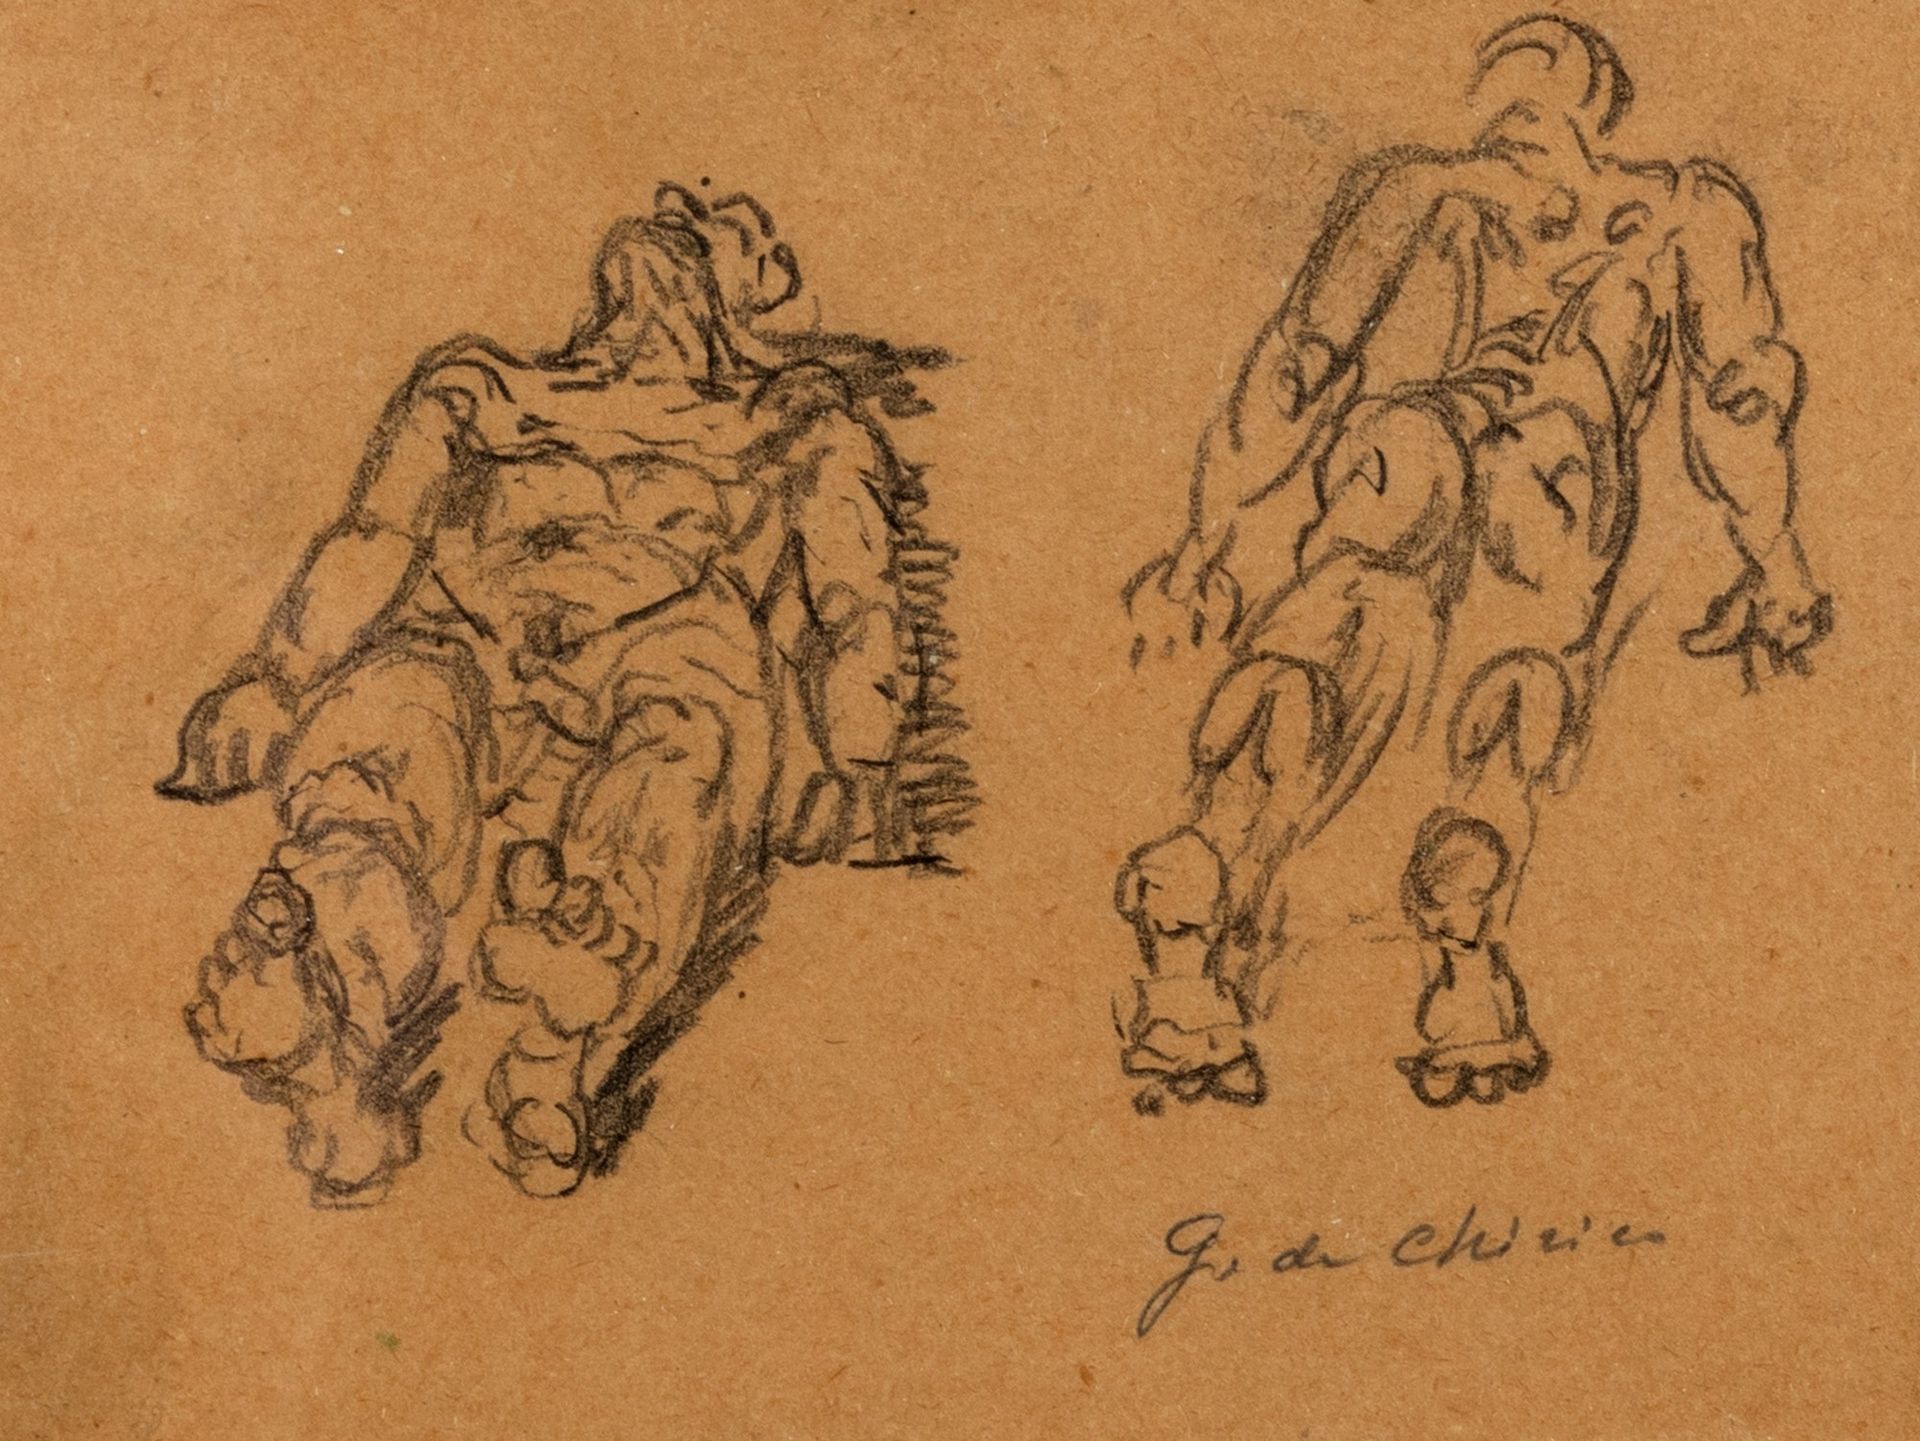 GIORGIO DE CHIRICO Etude de figures, 1946

crayon sur papier
11 x 14,4 cm
Signé &hellip;